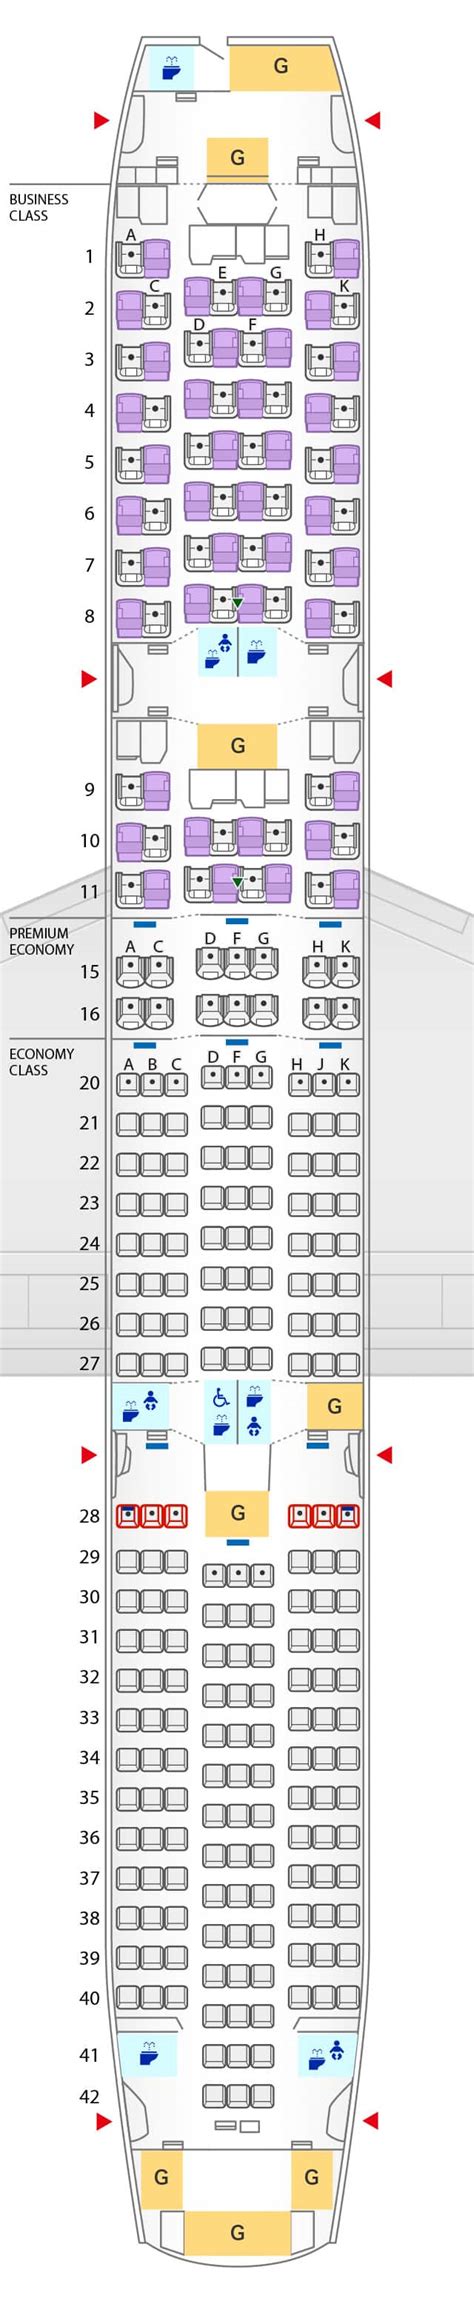 MAP Boeing 787 9 Seat Map